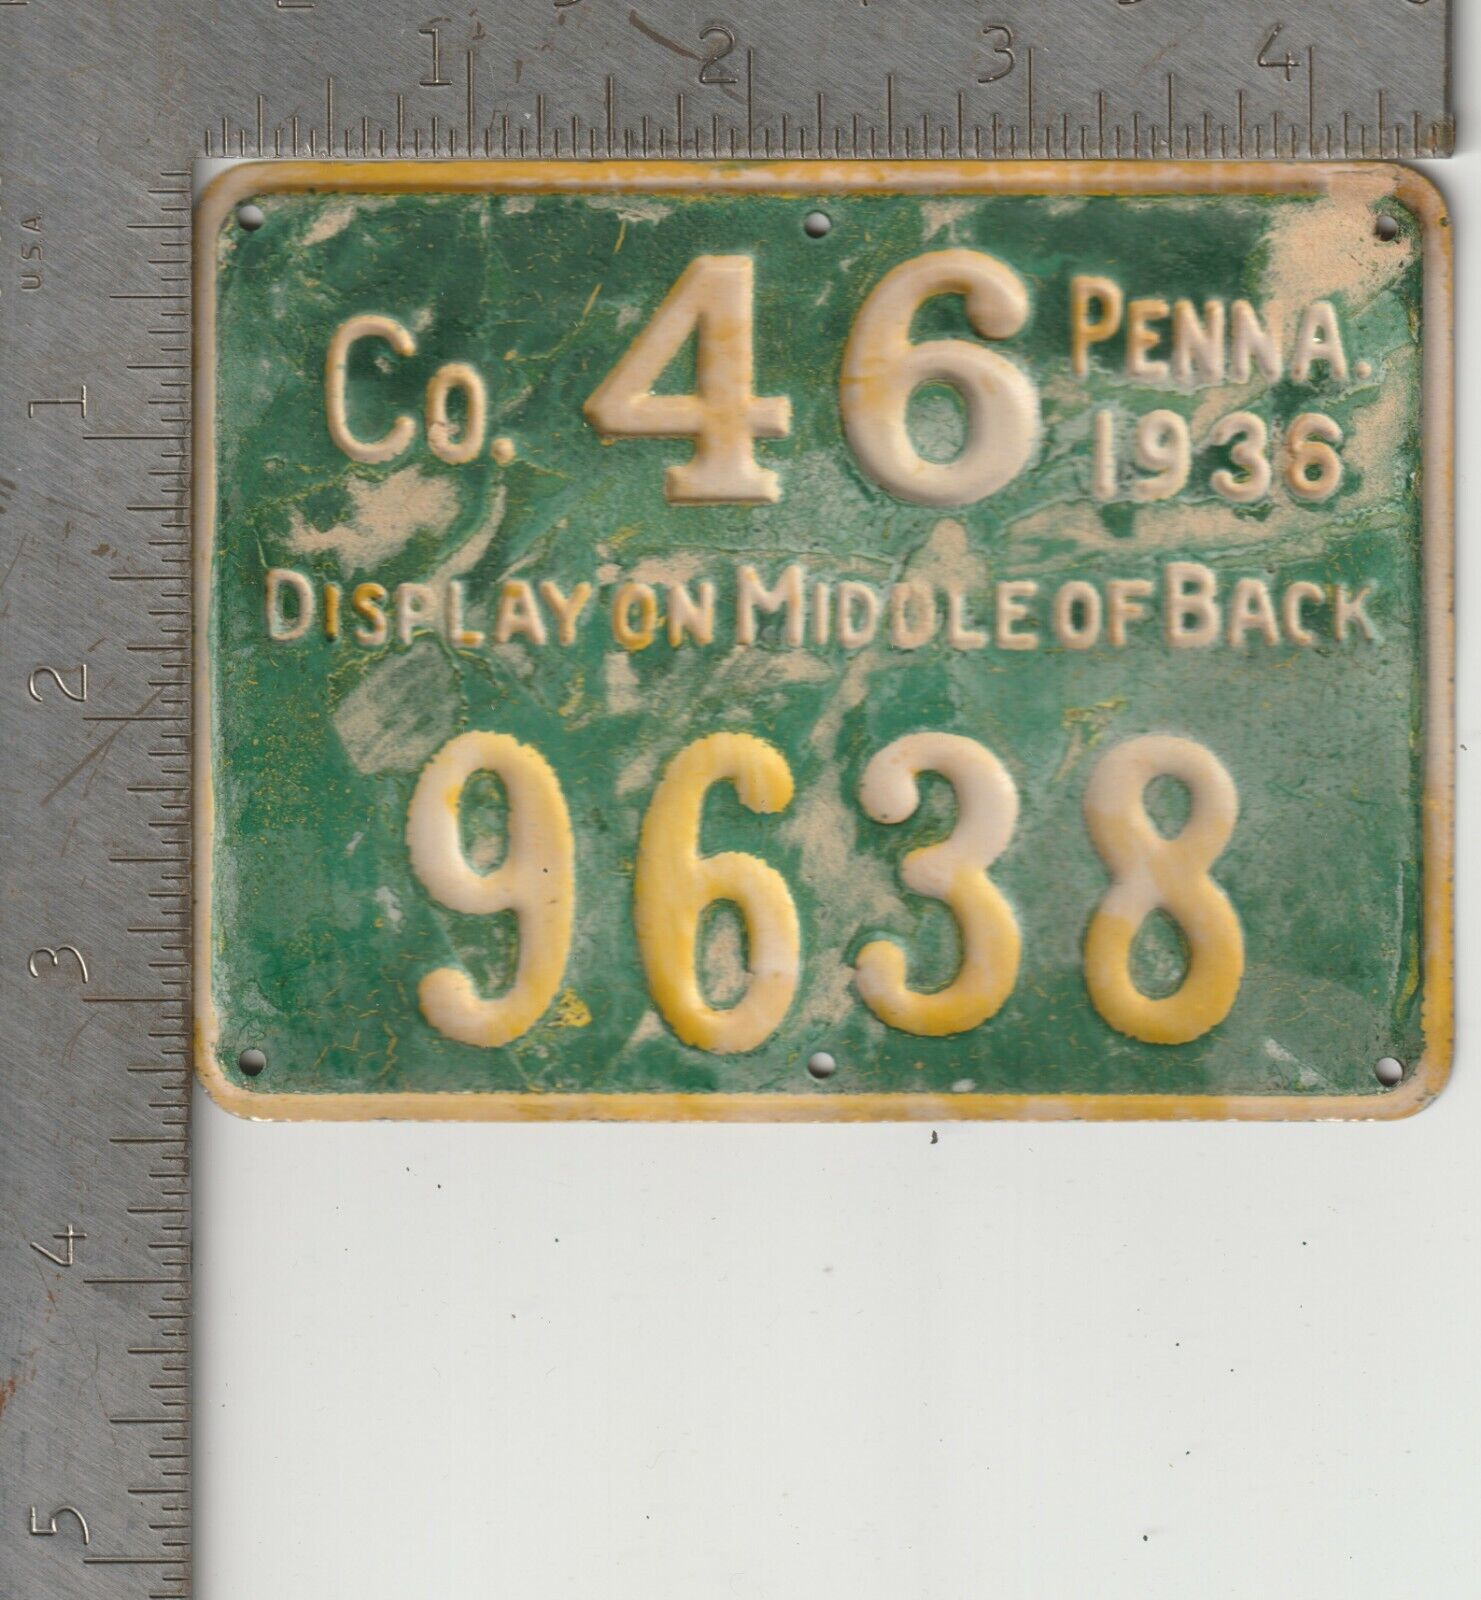 1936 Pennsylvania Co 46 #9638 Green & Yellow Metal Tin Hunting License Display